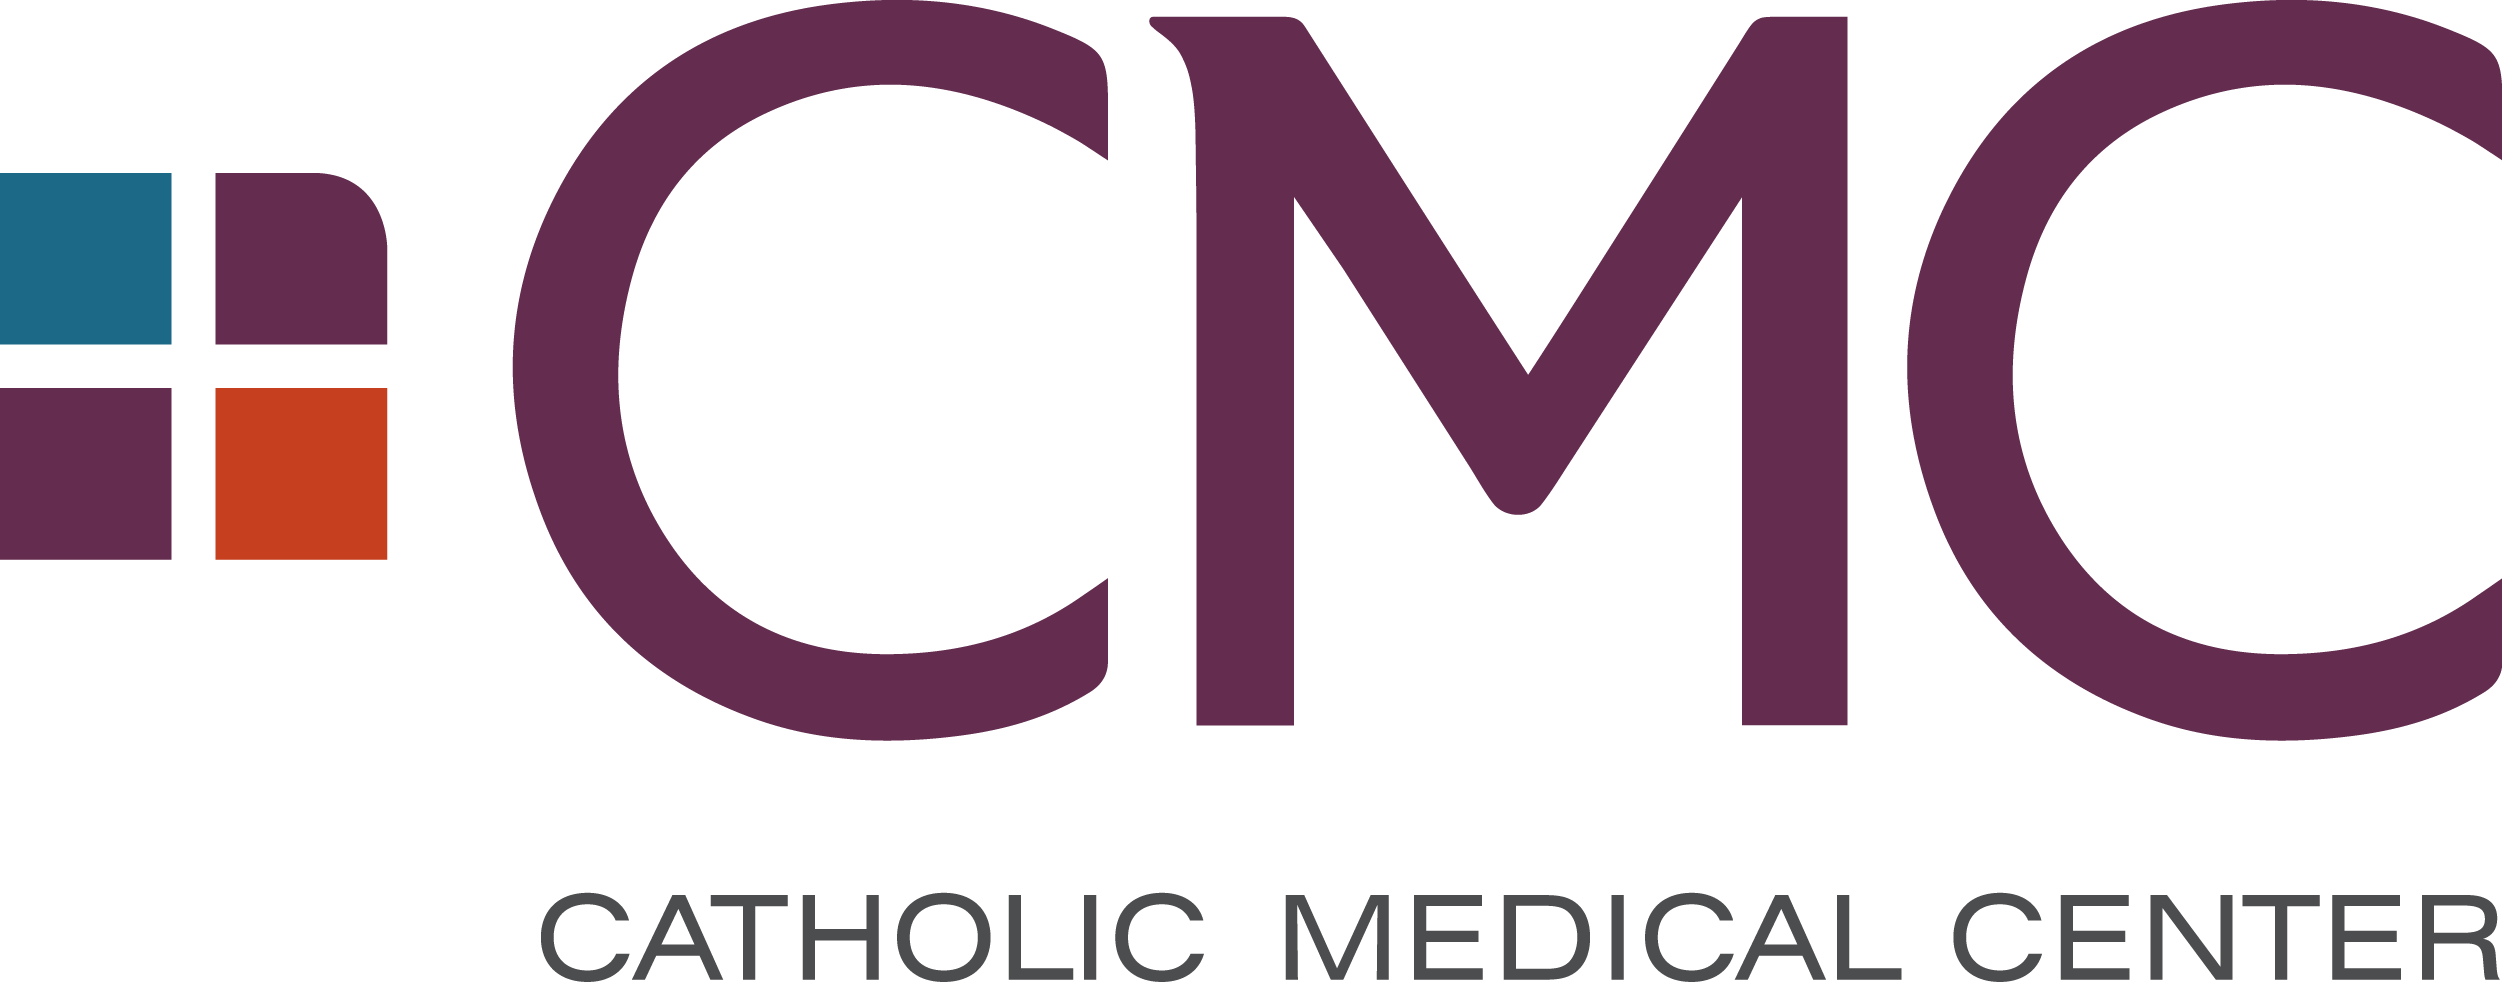 Catholic Medical Center Exploring Merger with HCA Healthcare